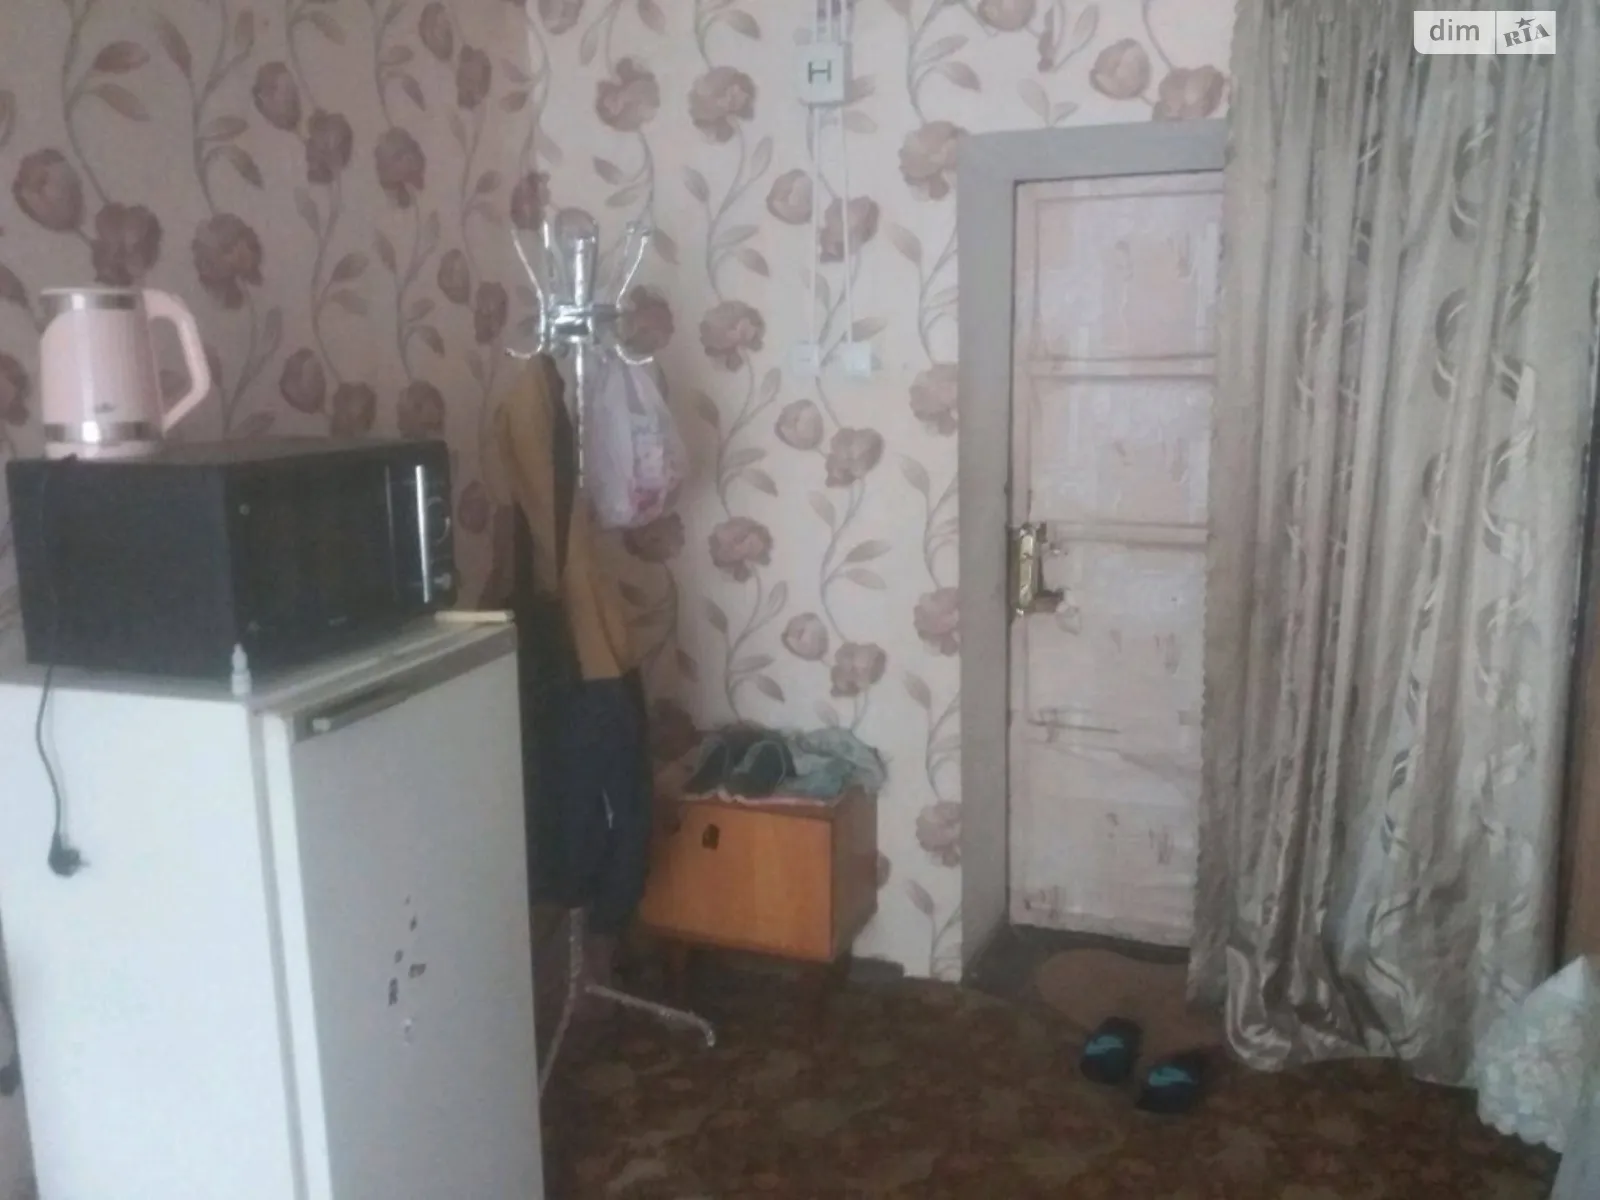 Продается комната 27 кв. м в Одессе, цена: 4200 $ - фото 1